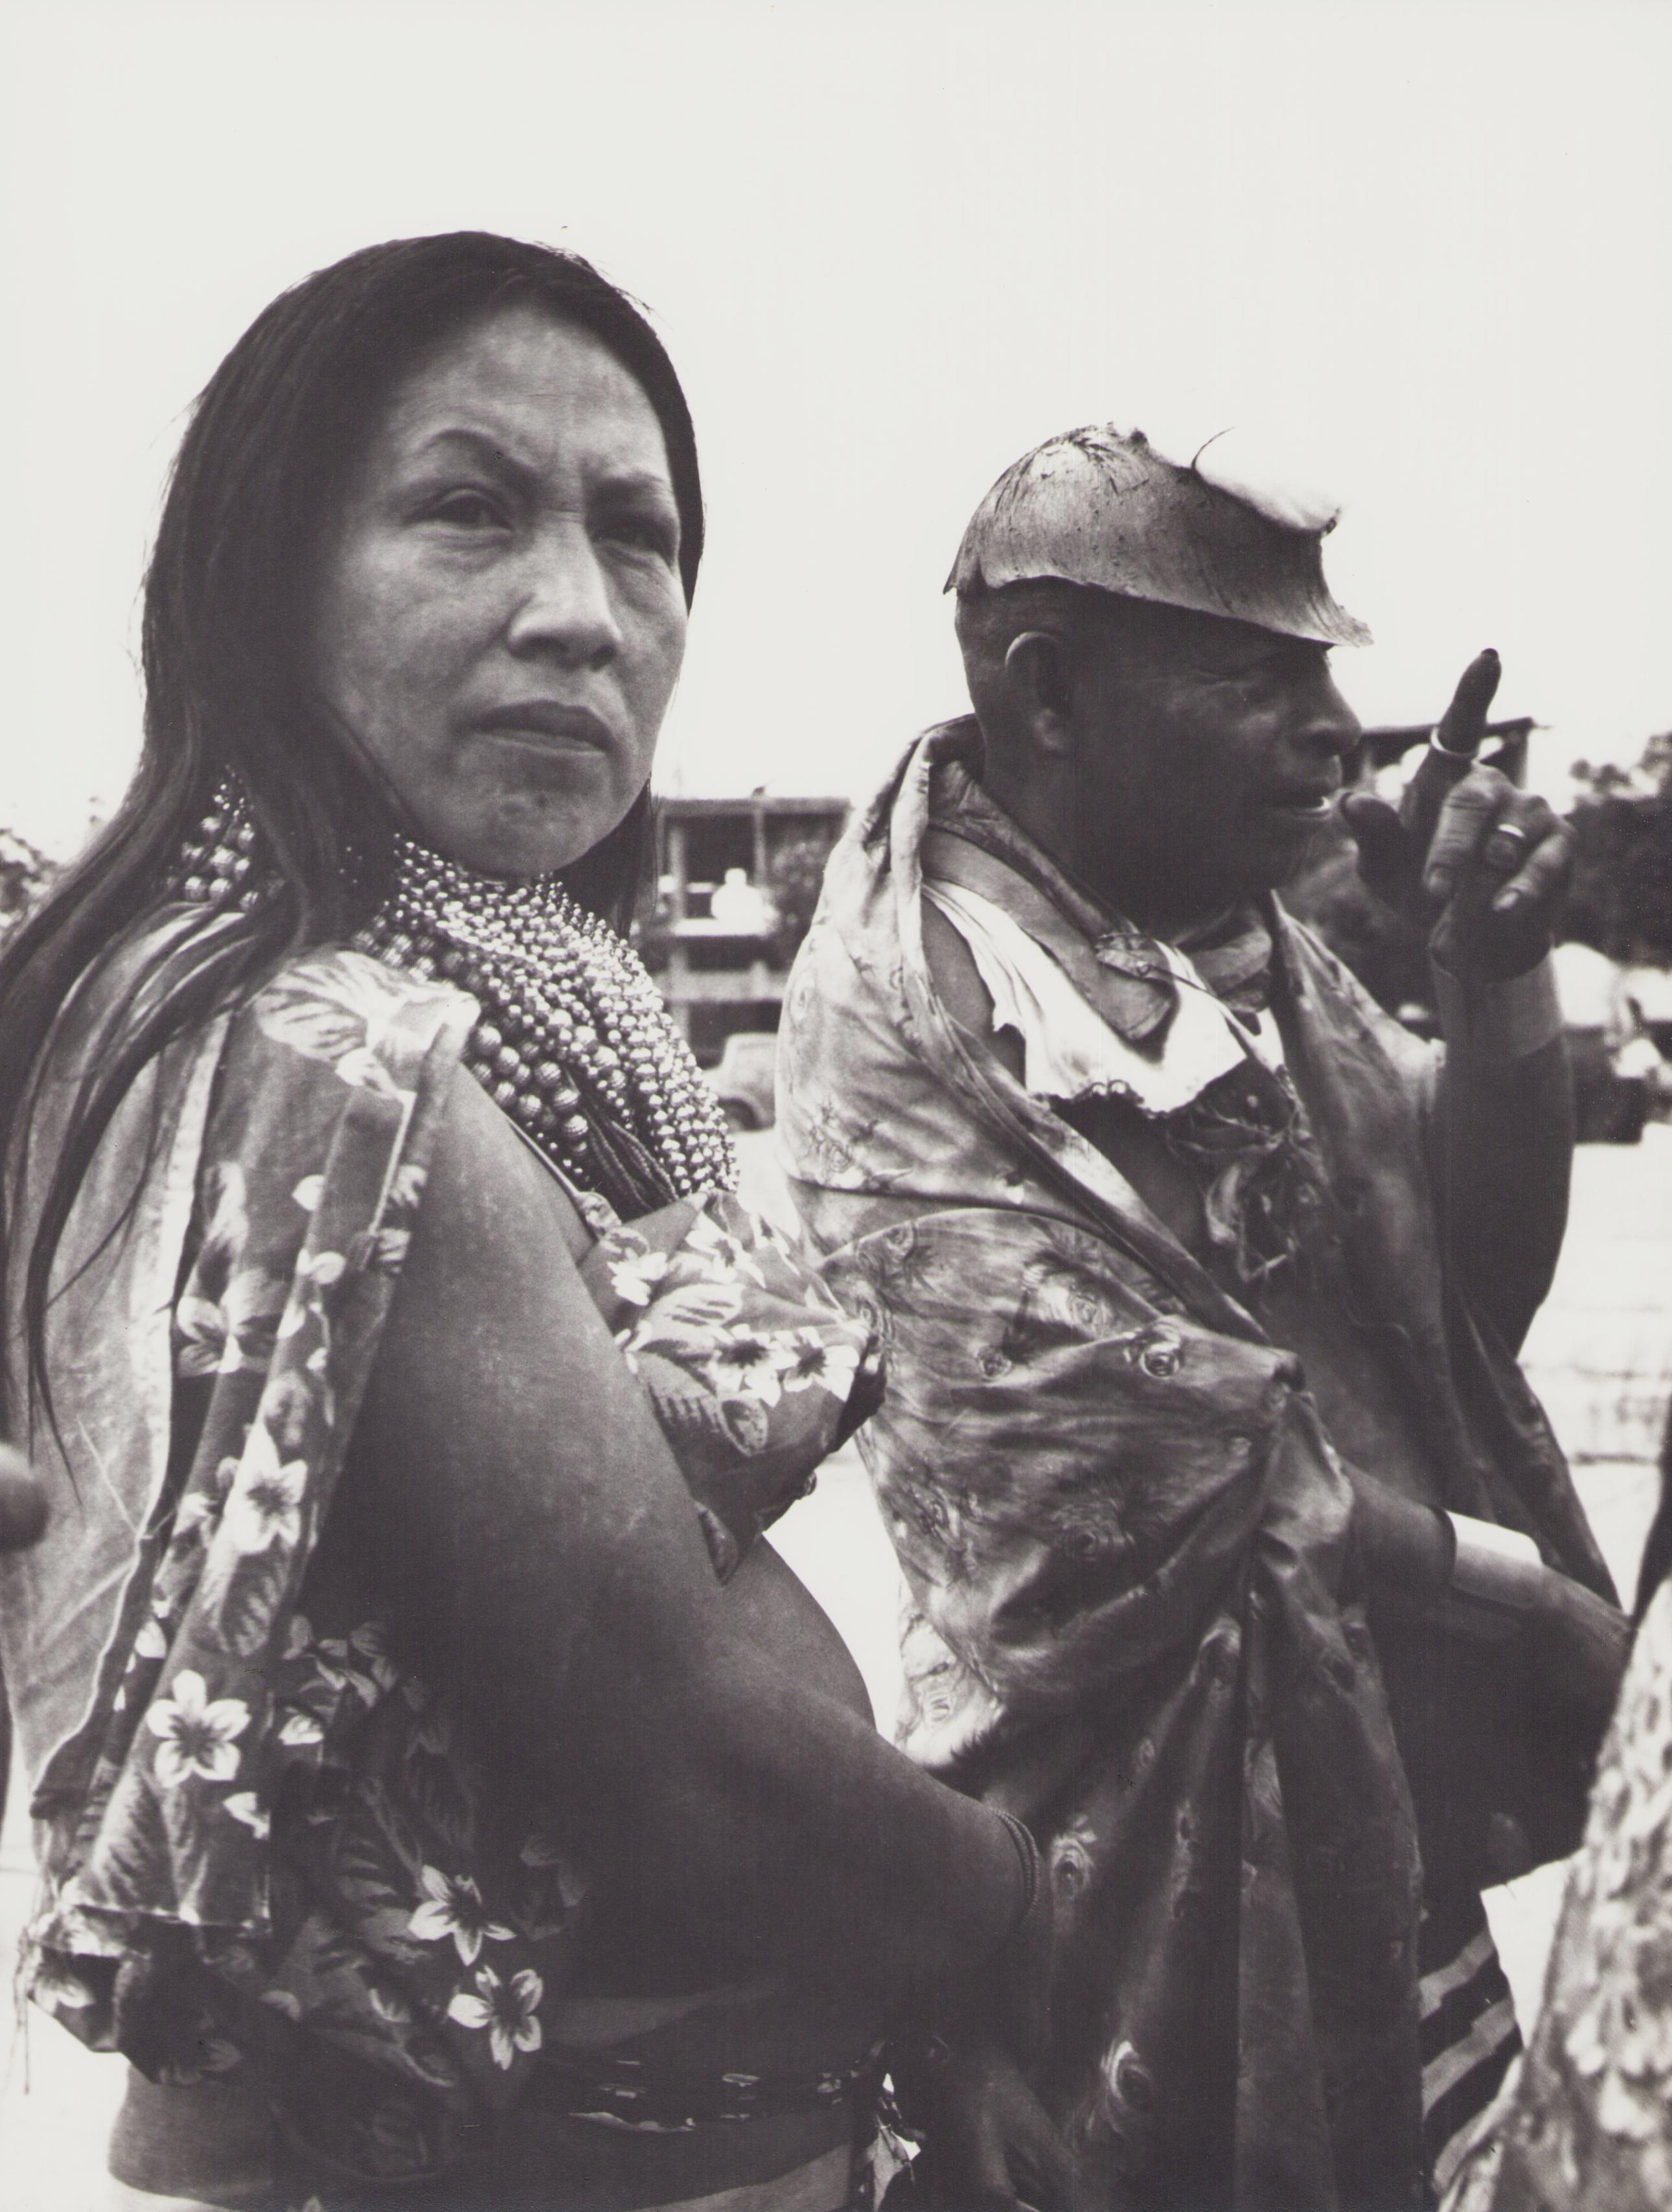 Ecuador, Indigenous, Black and White Photography, 1960s, 29 x 22, 4 cm